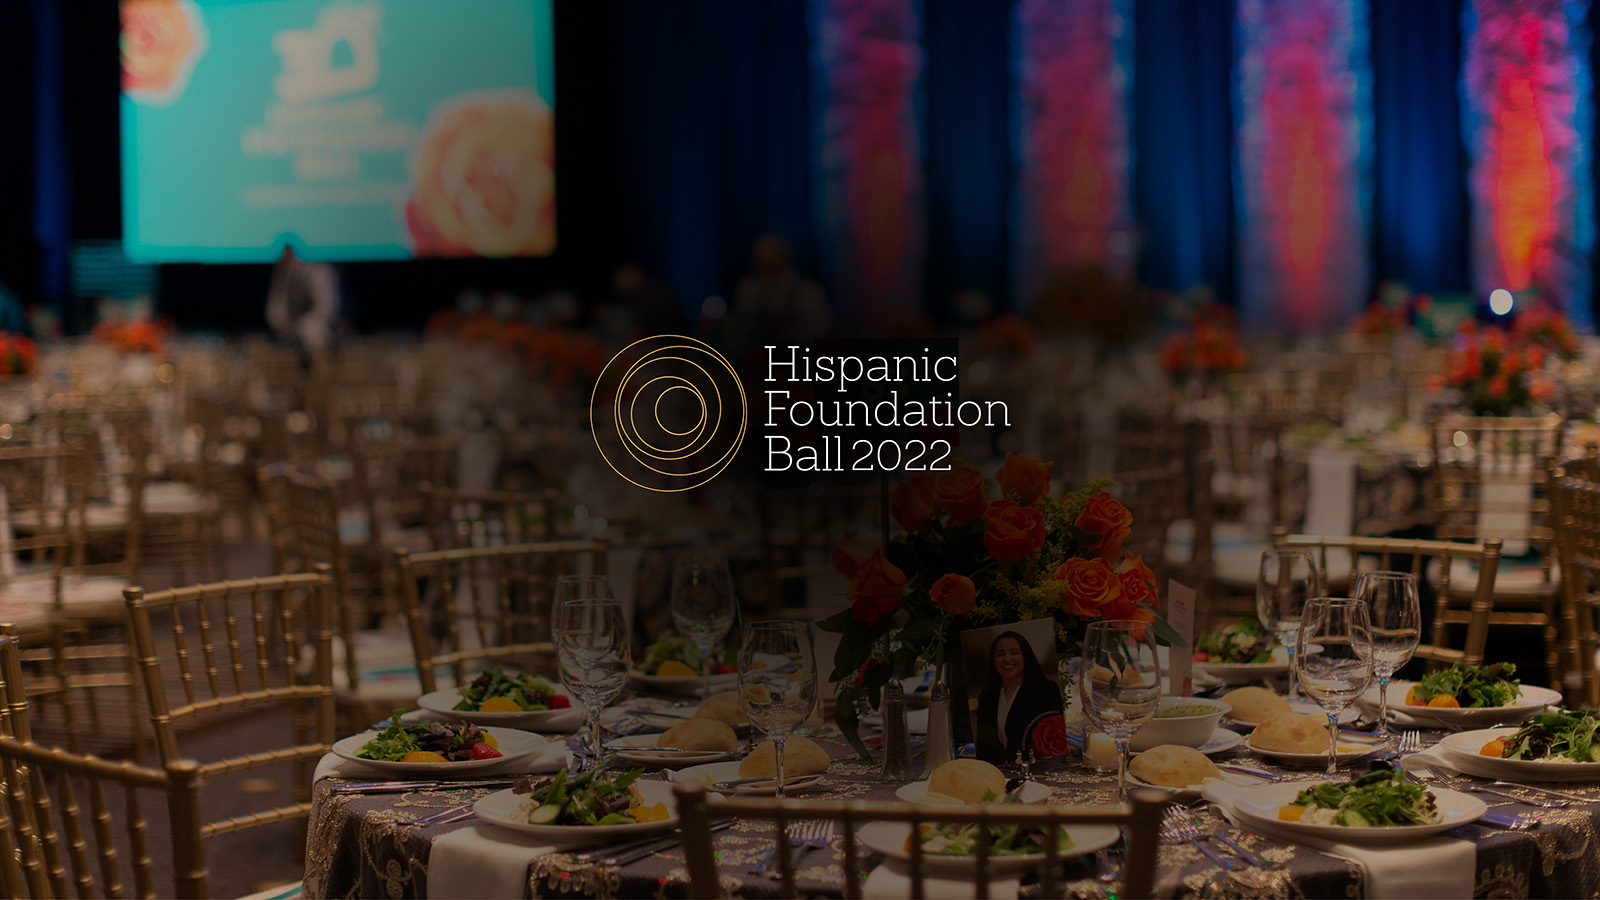 The Hispanic Foundation Ball